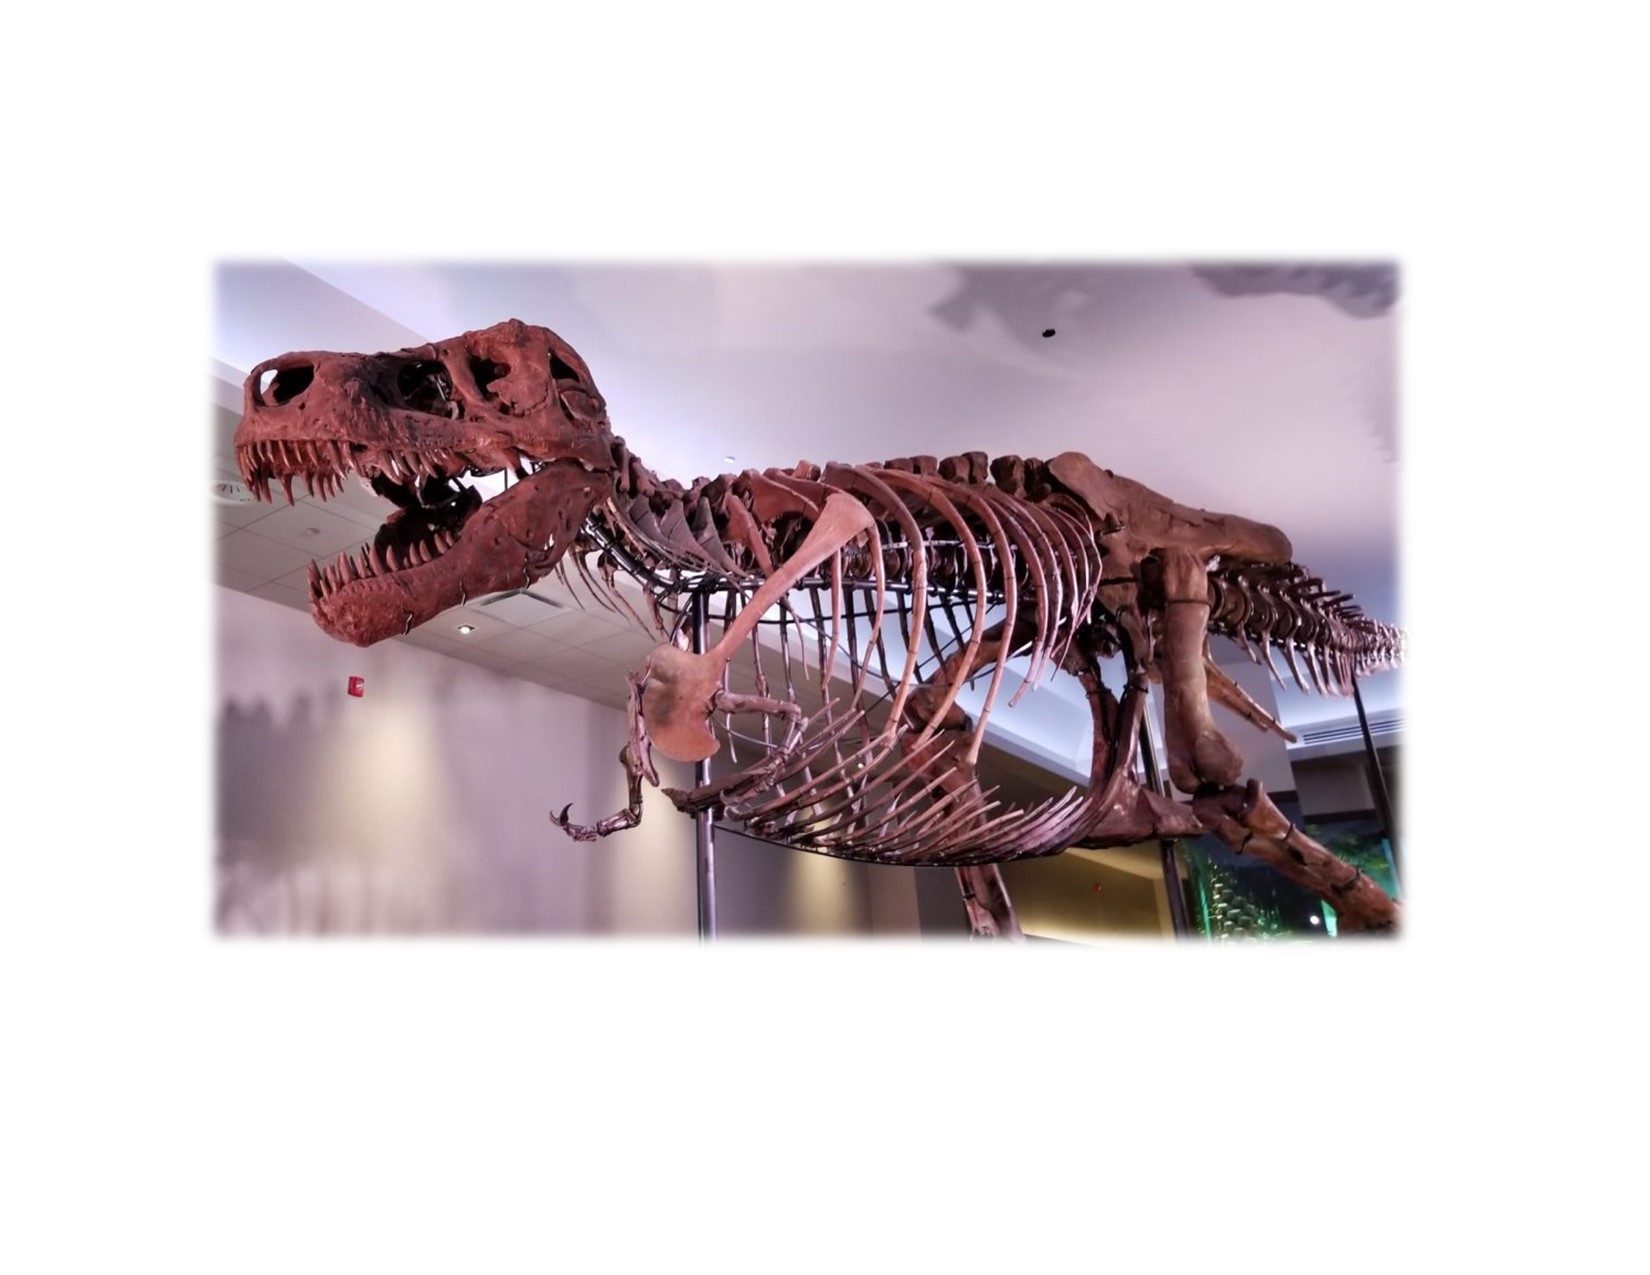 bones of a T-Rex on display in a museum